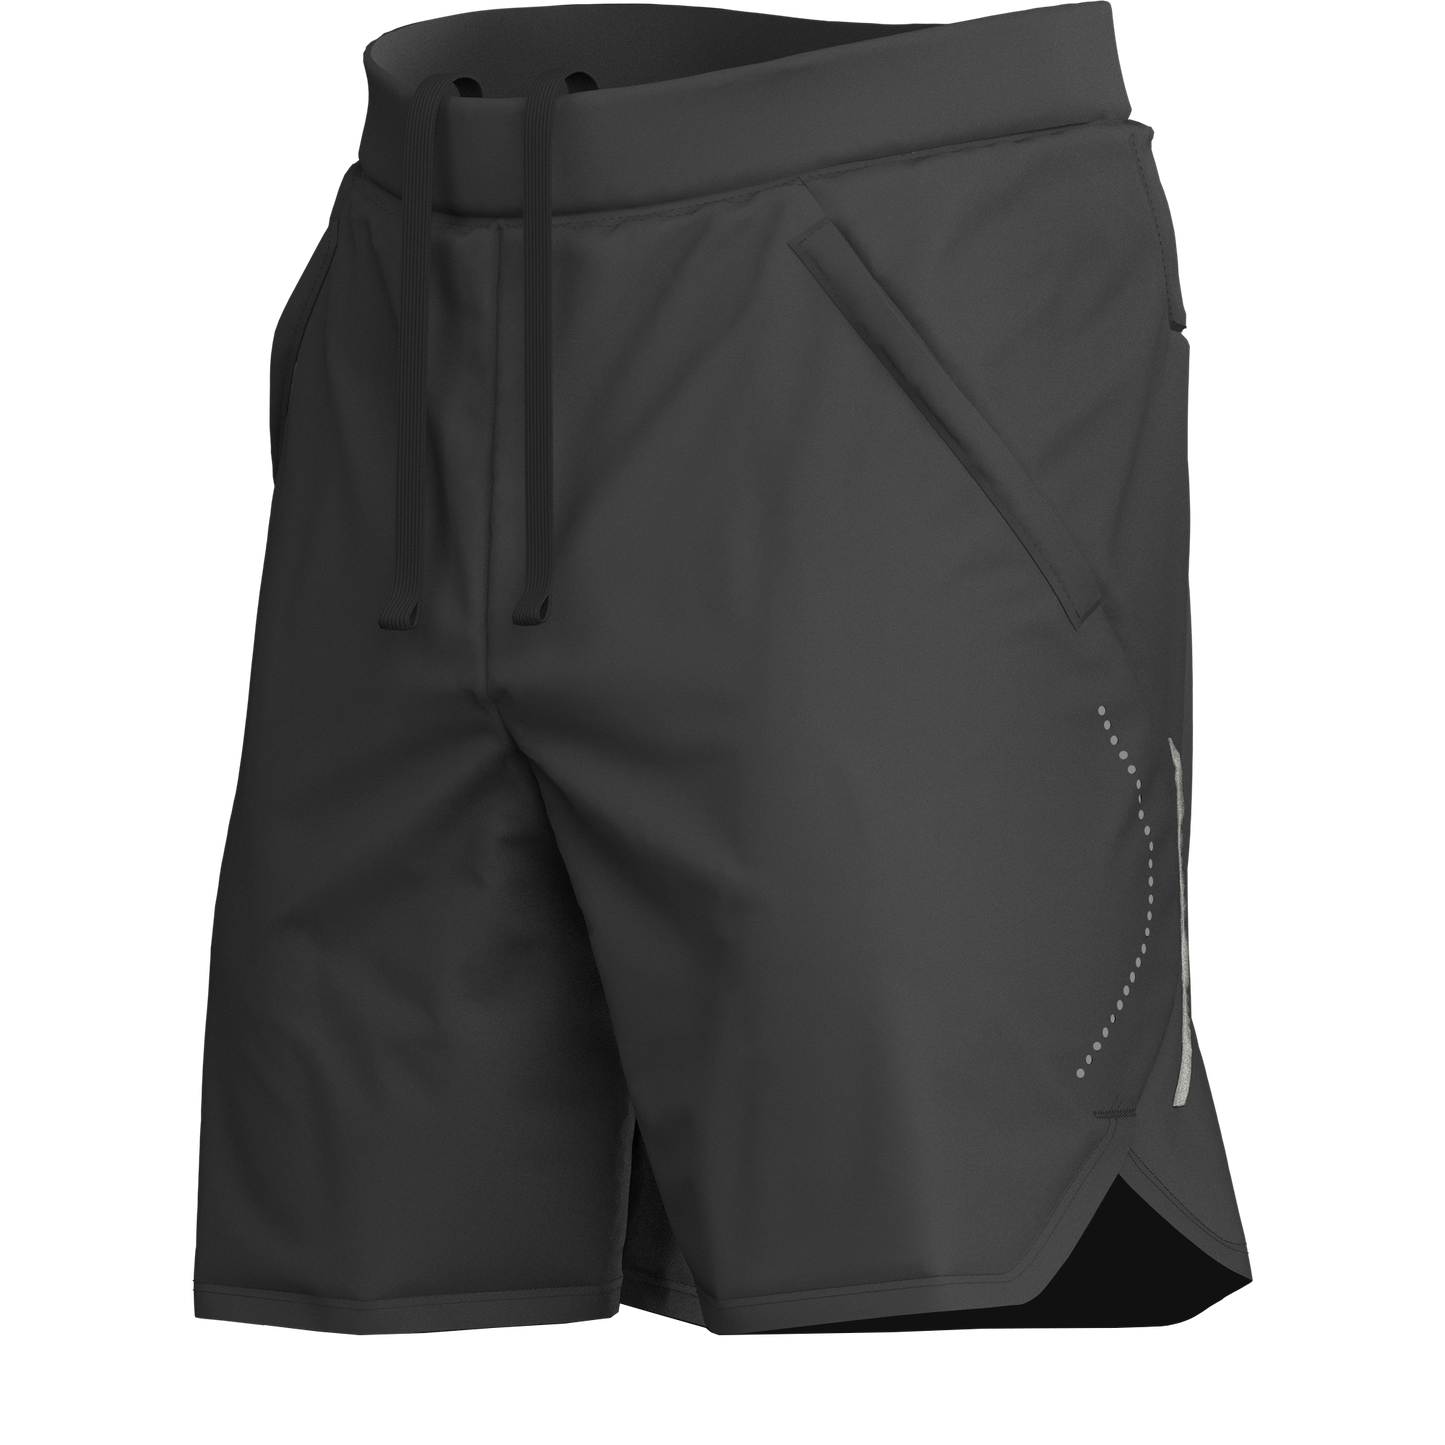 Men's Grey Sports Shorts for Running & Gym